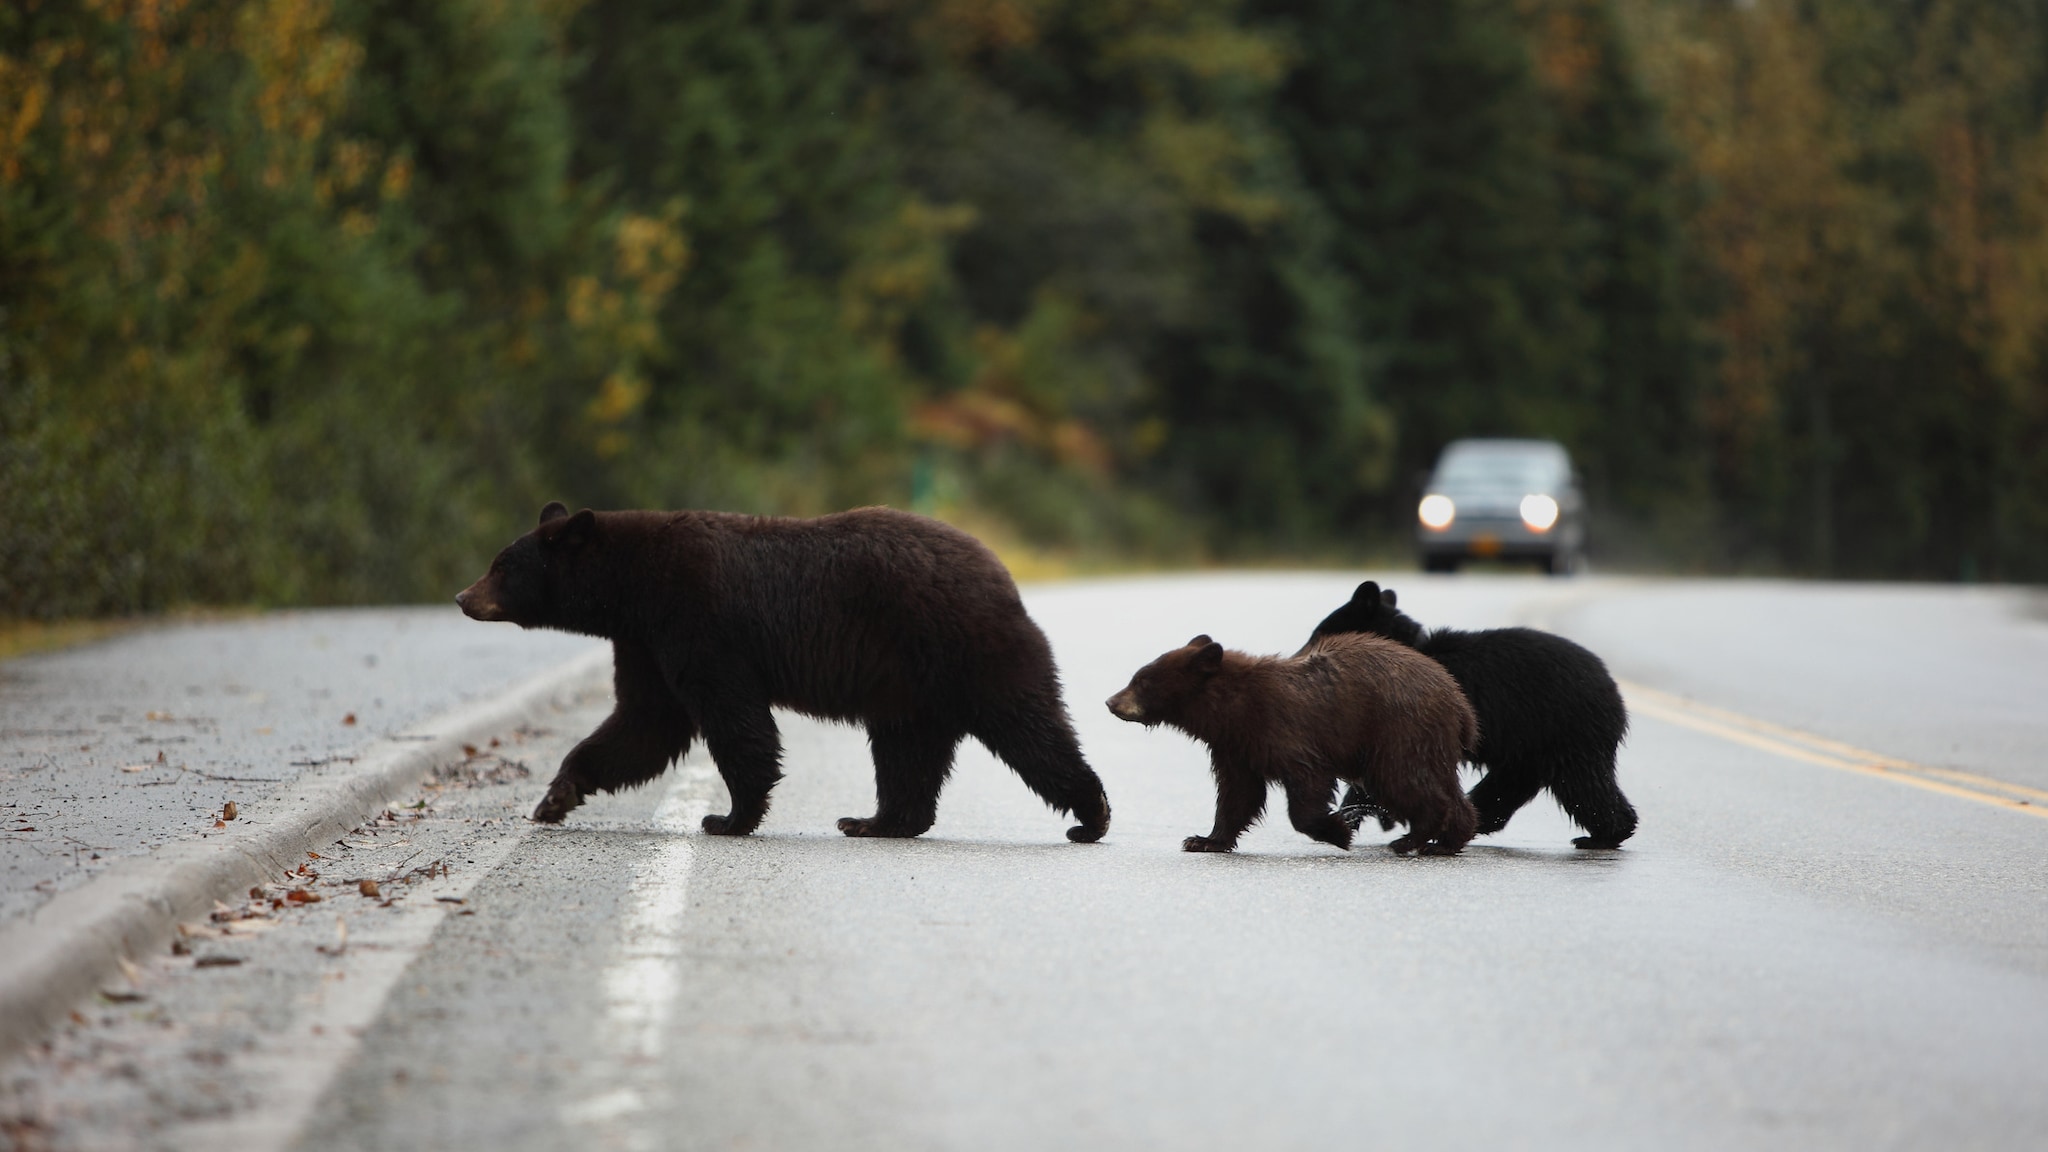 Mama bear and baby bears crossing a road